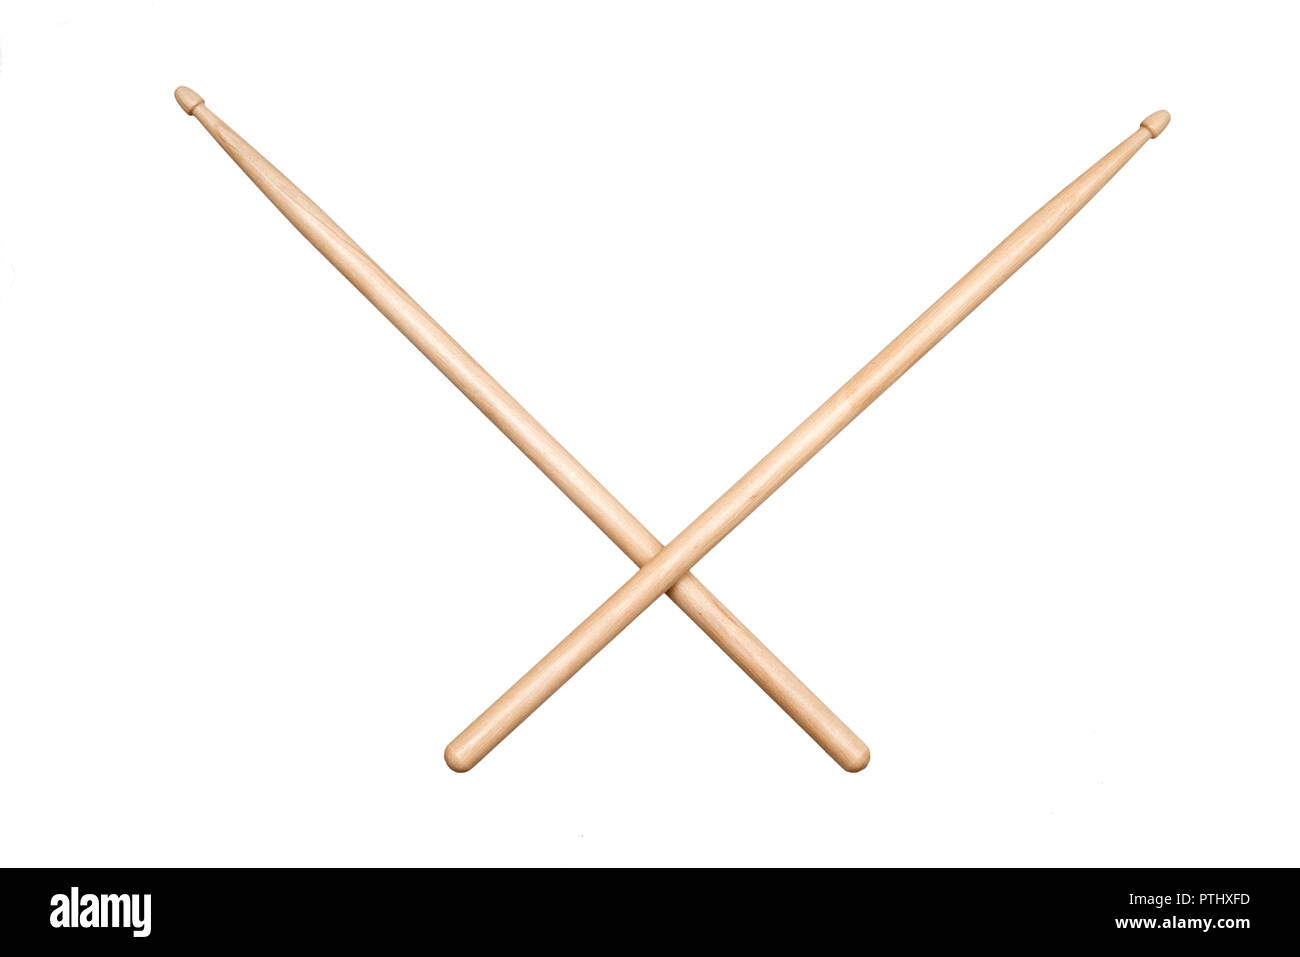 Знак 1 и 2 палочки. Барабанные палочки скрещенные. Барабанные палочки крест накрест. Барабан с палочками на белом фоне. Барабанные палочки на белом фоне.